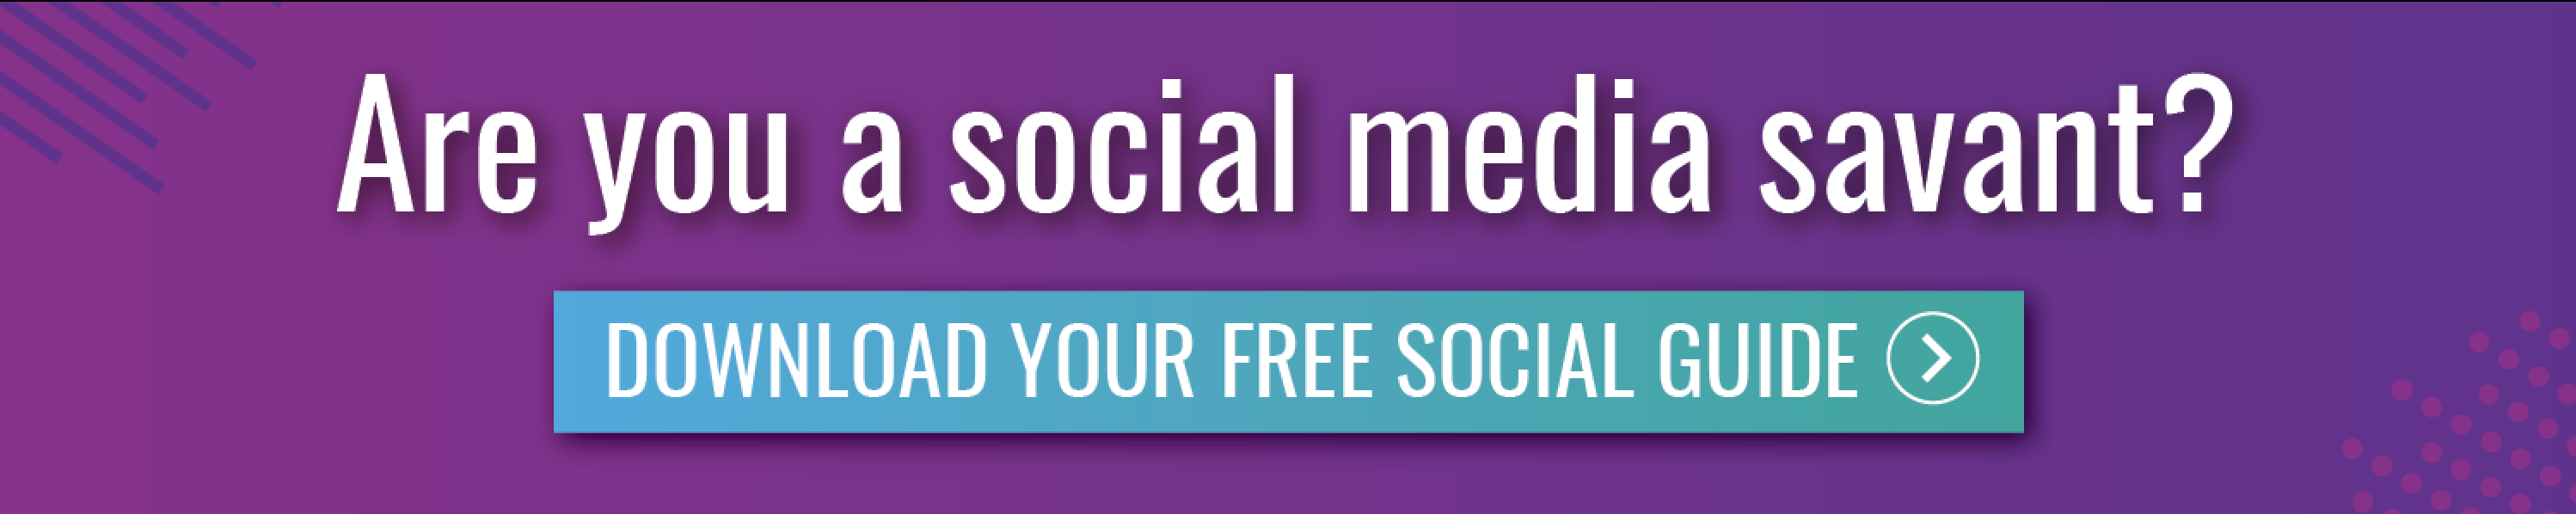 are you a social media savant?